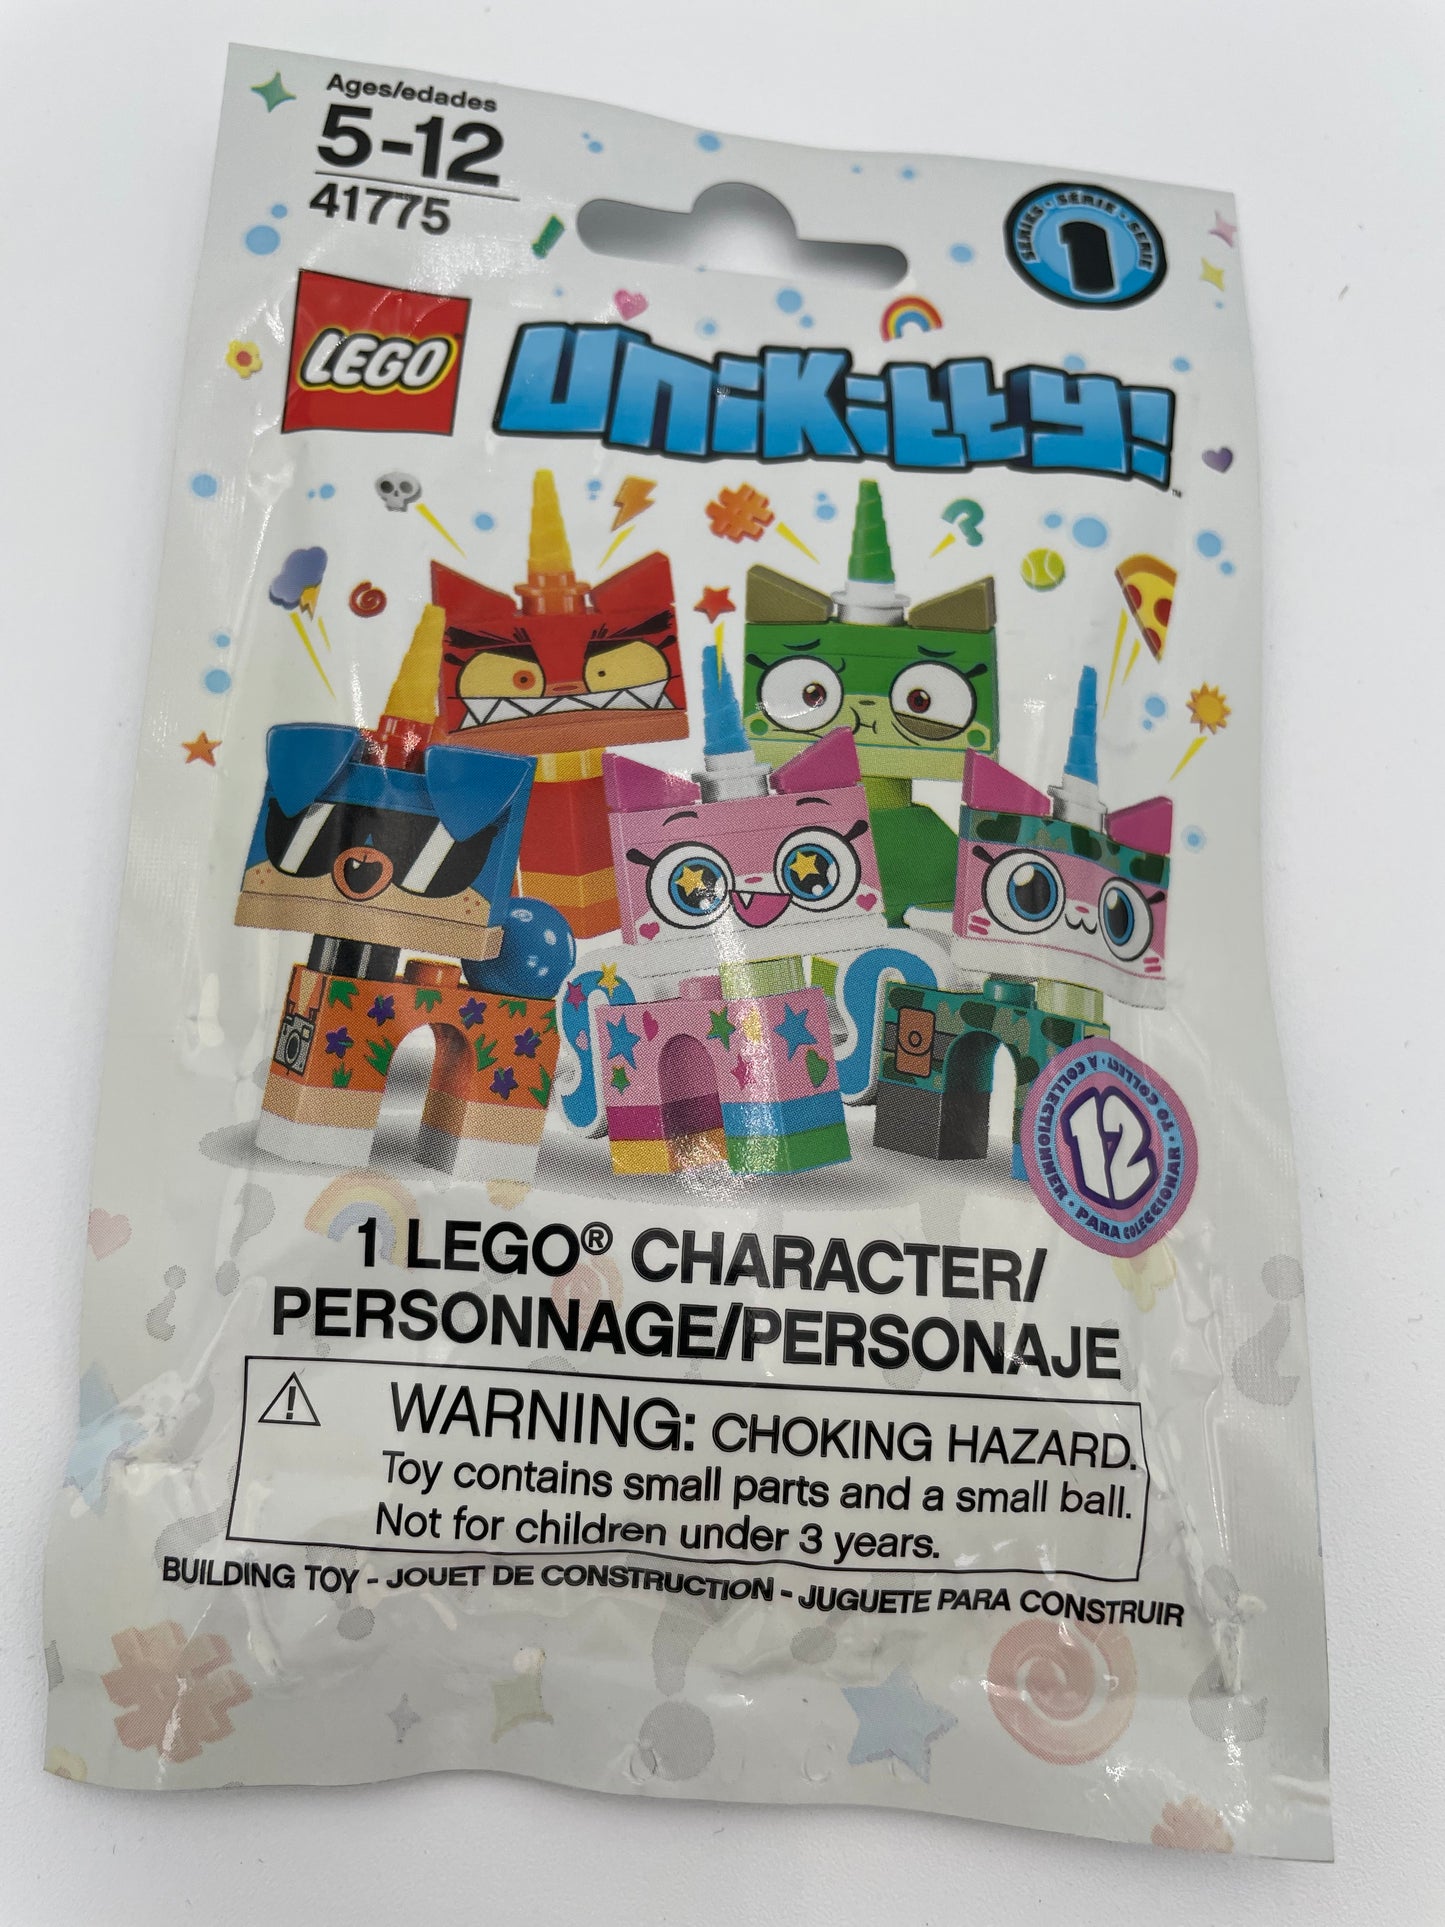 LEGO 41775 - Unikitty - Series 1 Pack 2018 #100373